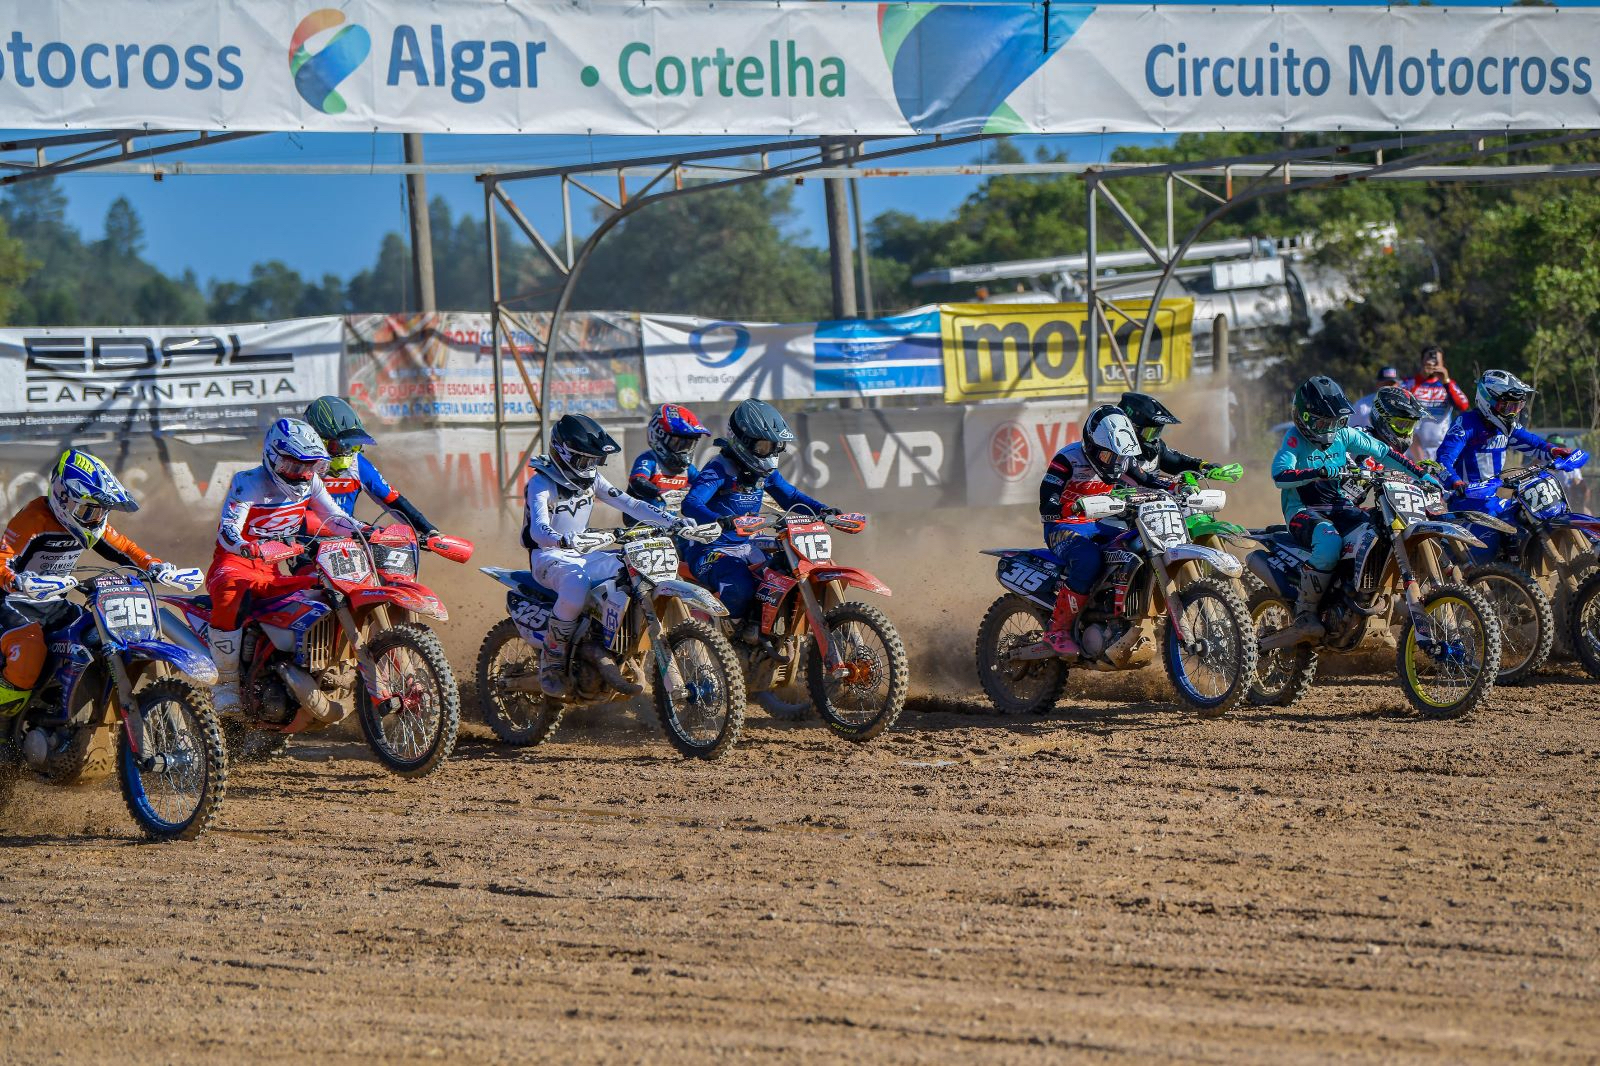 CR MXRibatejo, Cortelha: Motocross regressa ao Algarve thumbnail